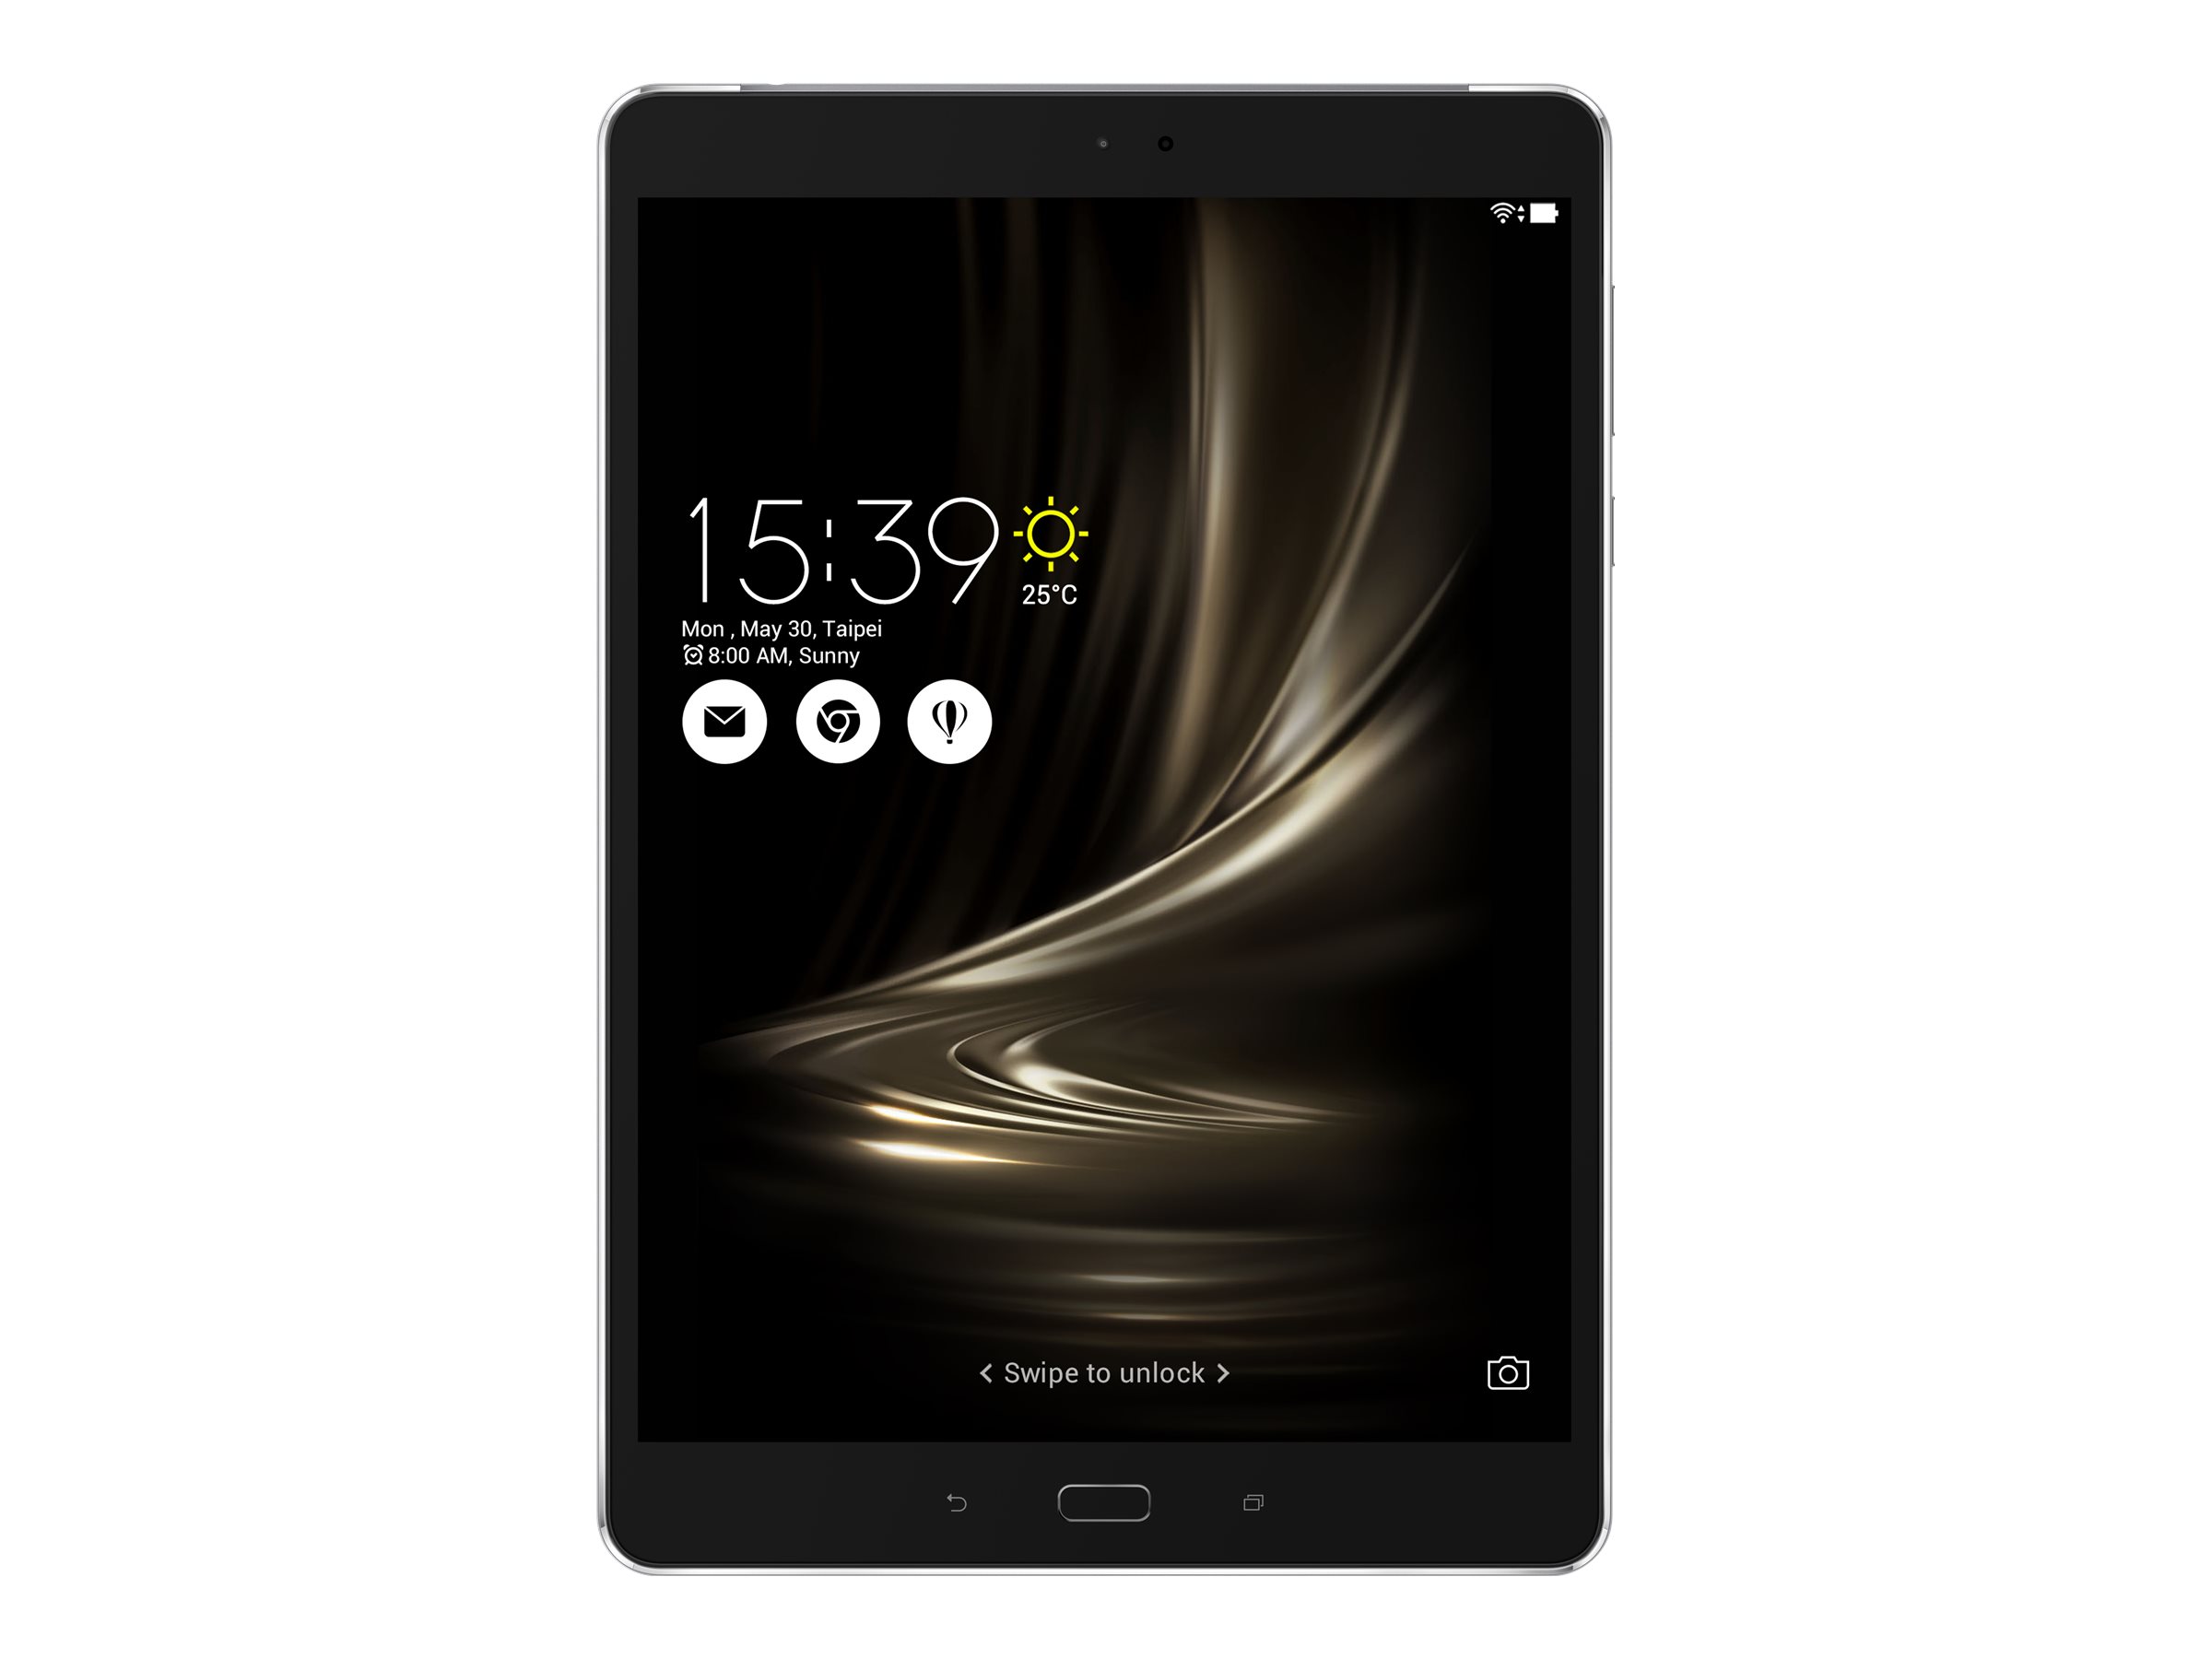 ASUS ZenPad 3S 10 Z500M - Tablet - Android 6.0 (Marshmallow) - 64 GB eMMC - 9.7" IPS (2048 x 1536) - microSD slot - titanium gray - image 1 of 16